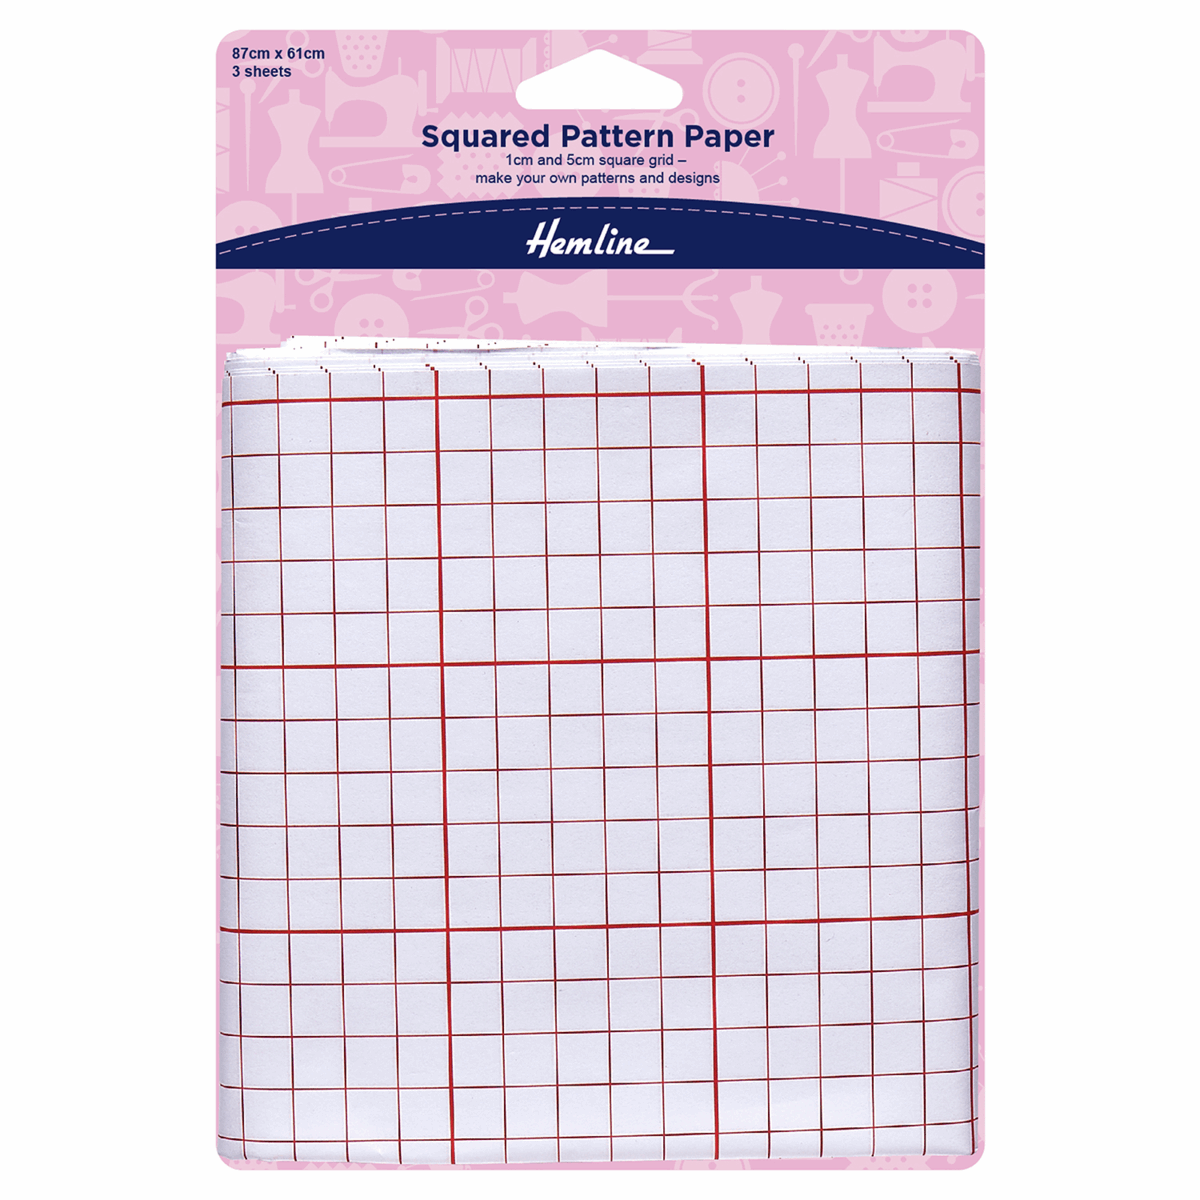 Hemline - Squared Pattern paper